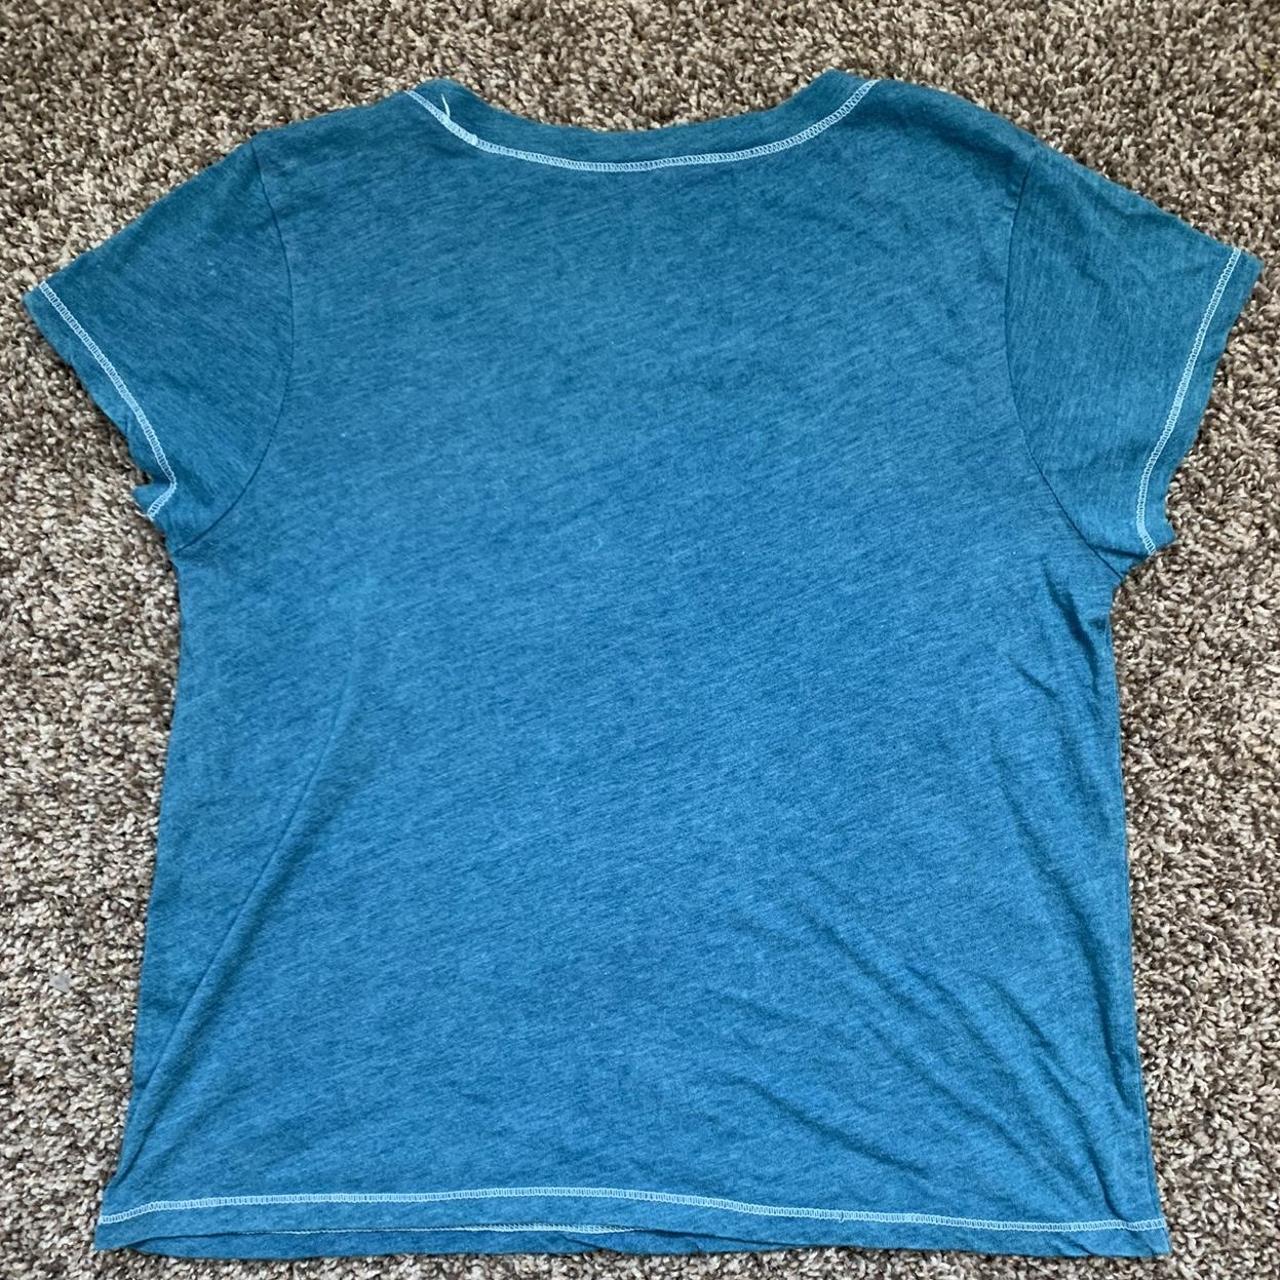 Cold Crush Women's Black and Blue T-shirt (3)